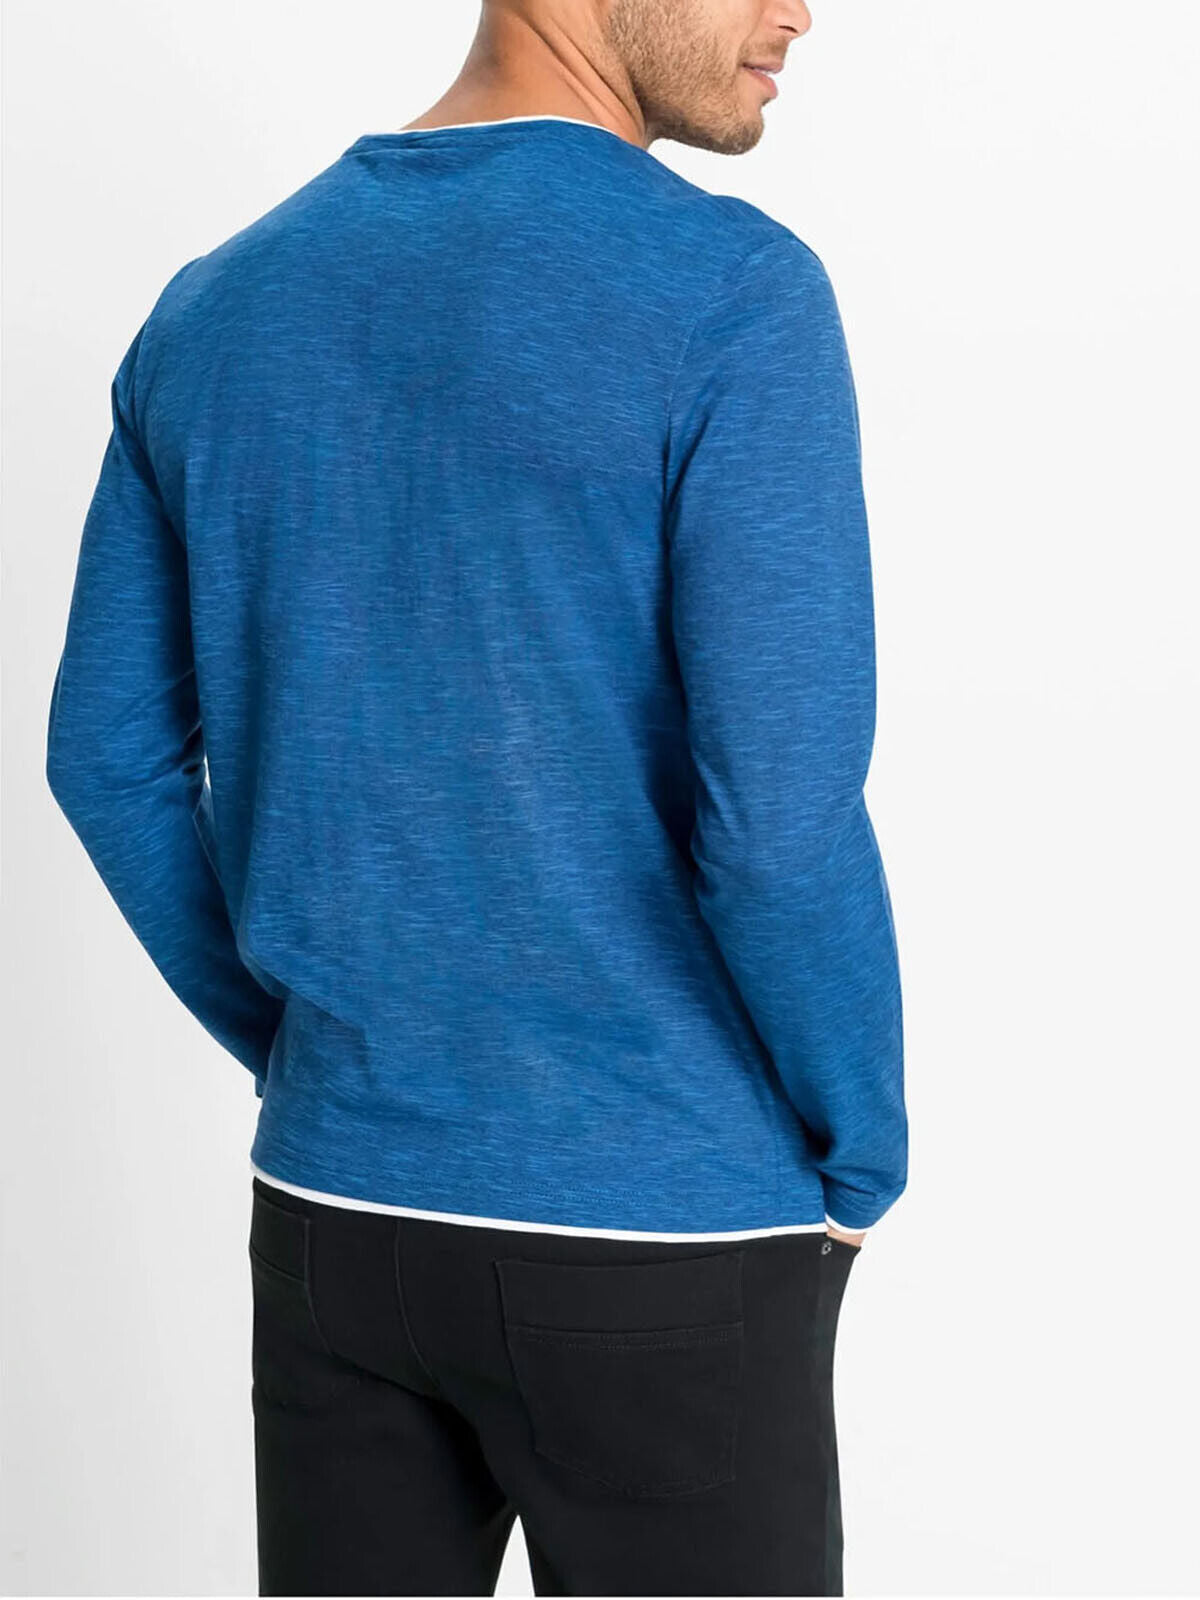 BPC Blue Mens Pure Cotton Henley Neck Long Sleeve T-Shirt Sizes L, XL, 2XL, 3XL